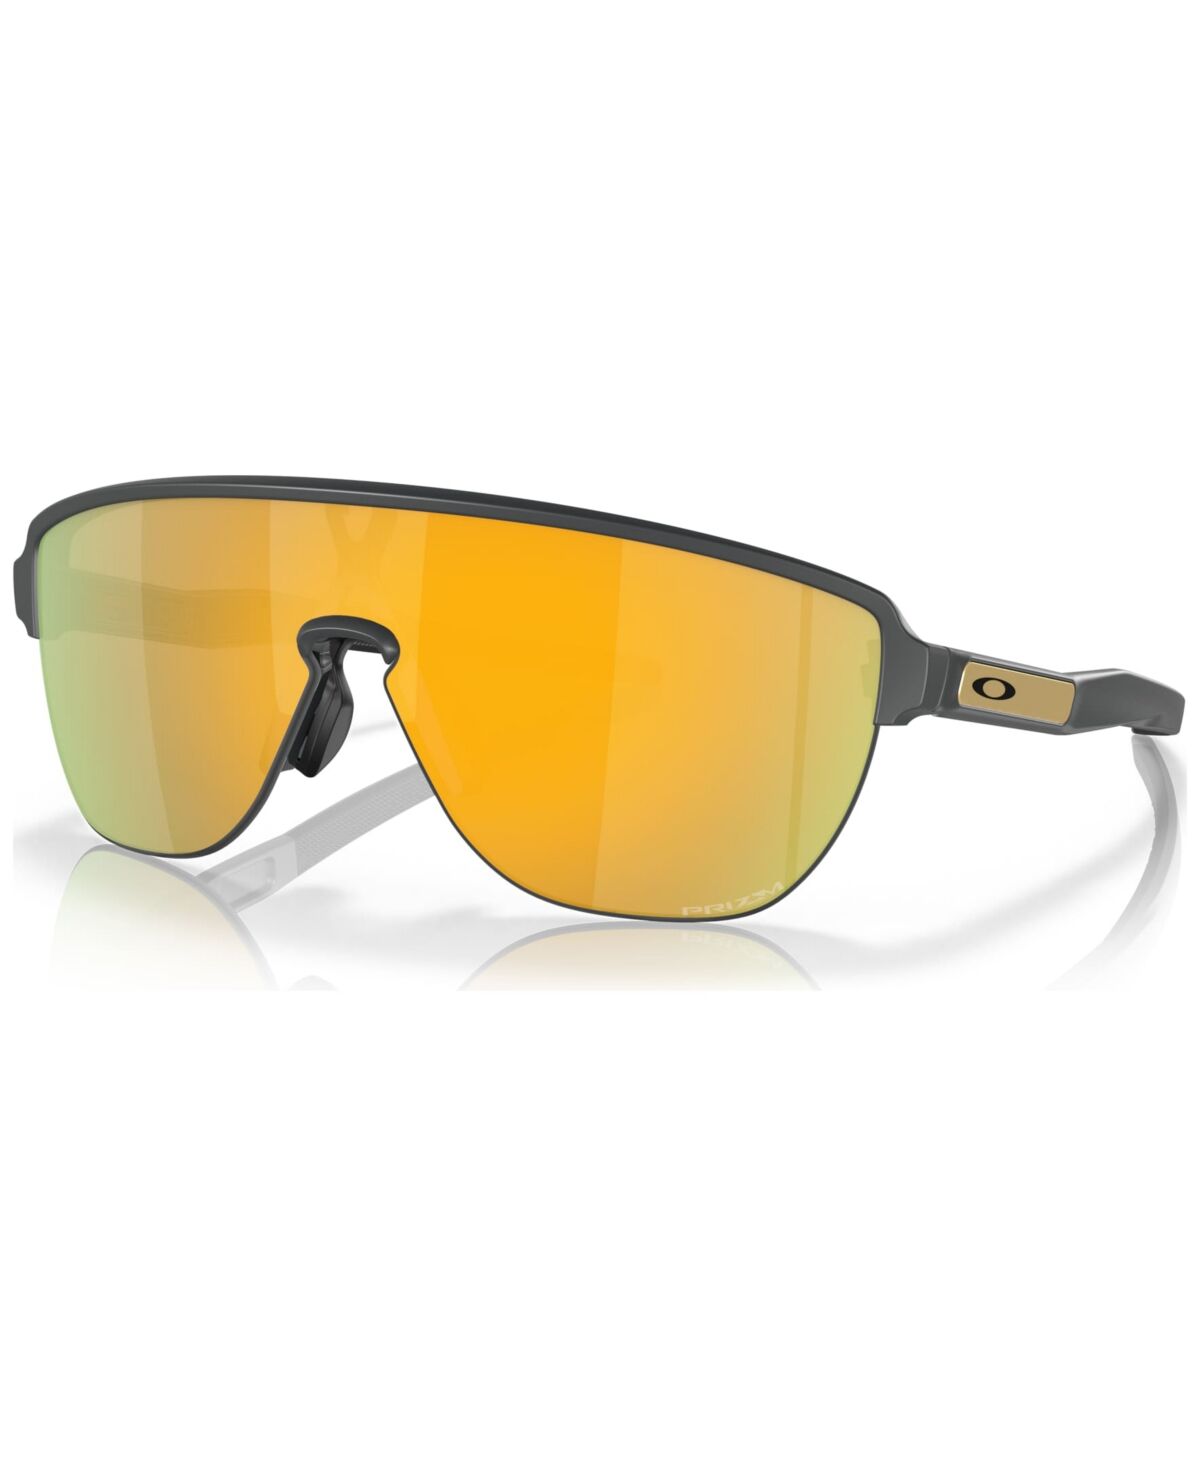 Oakley Men's Corridor Sunglasses, OO9248 - Matte Carbon